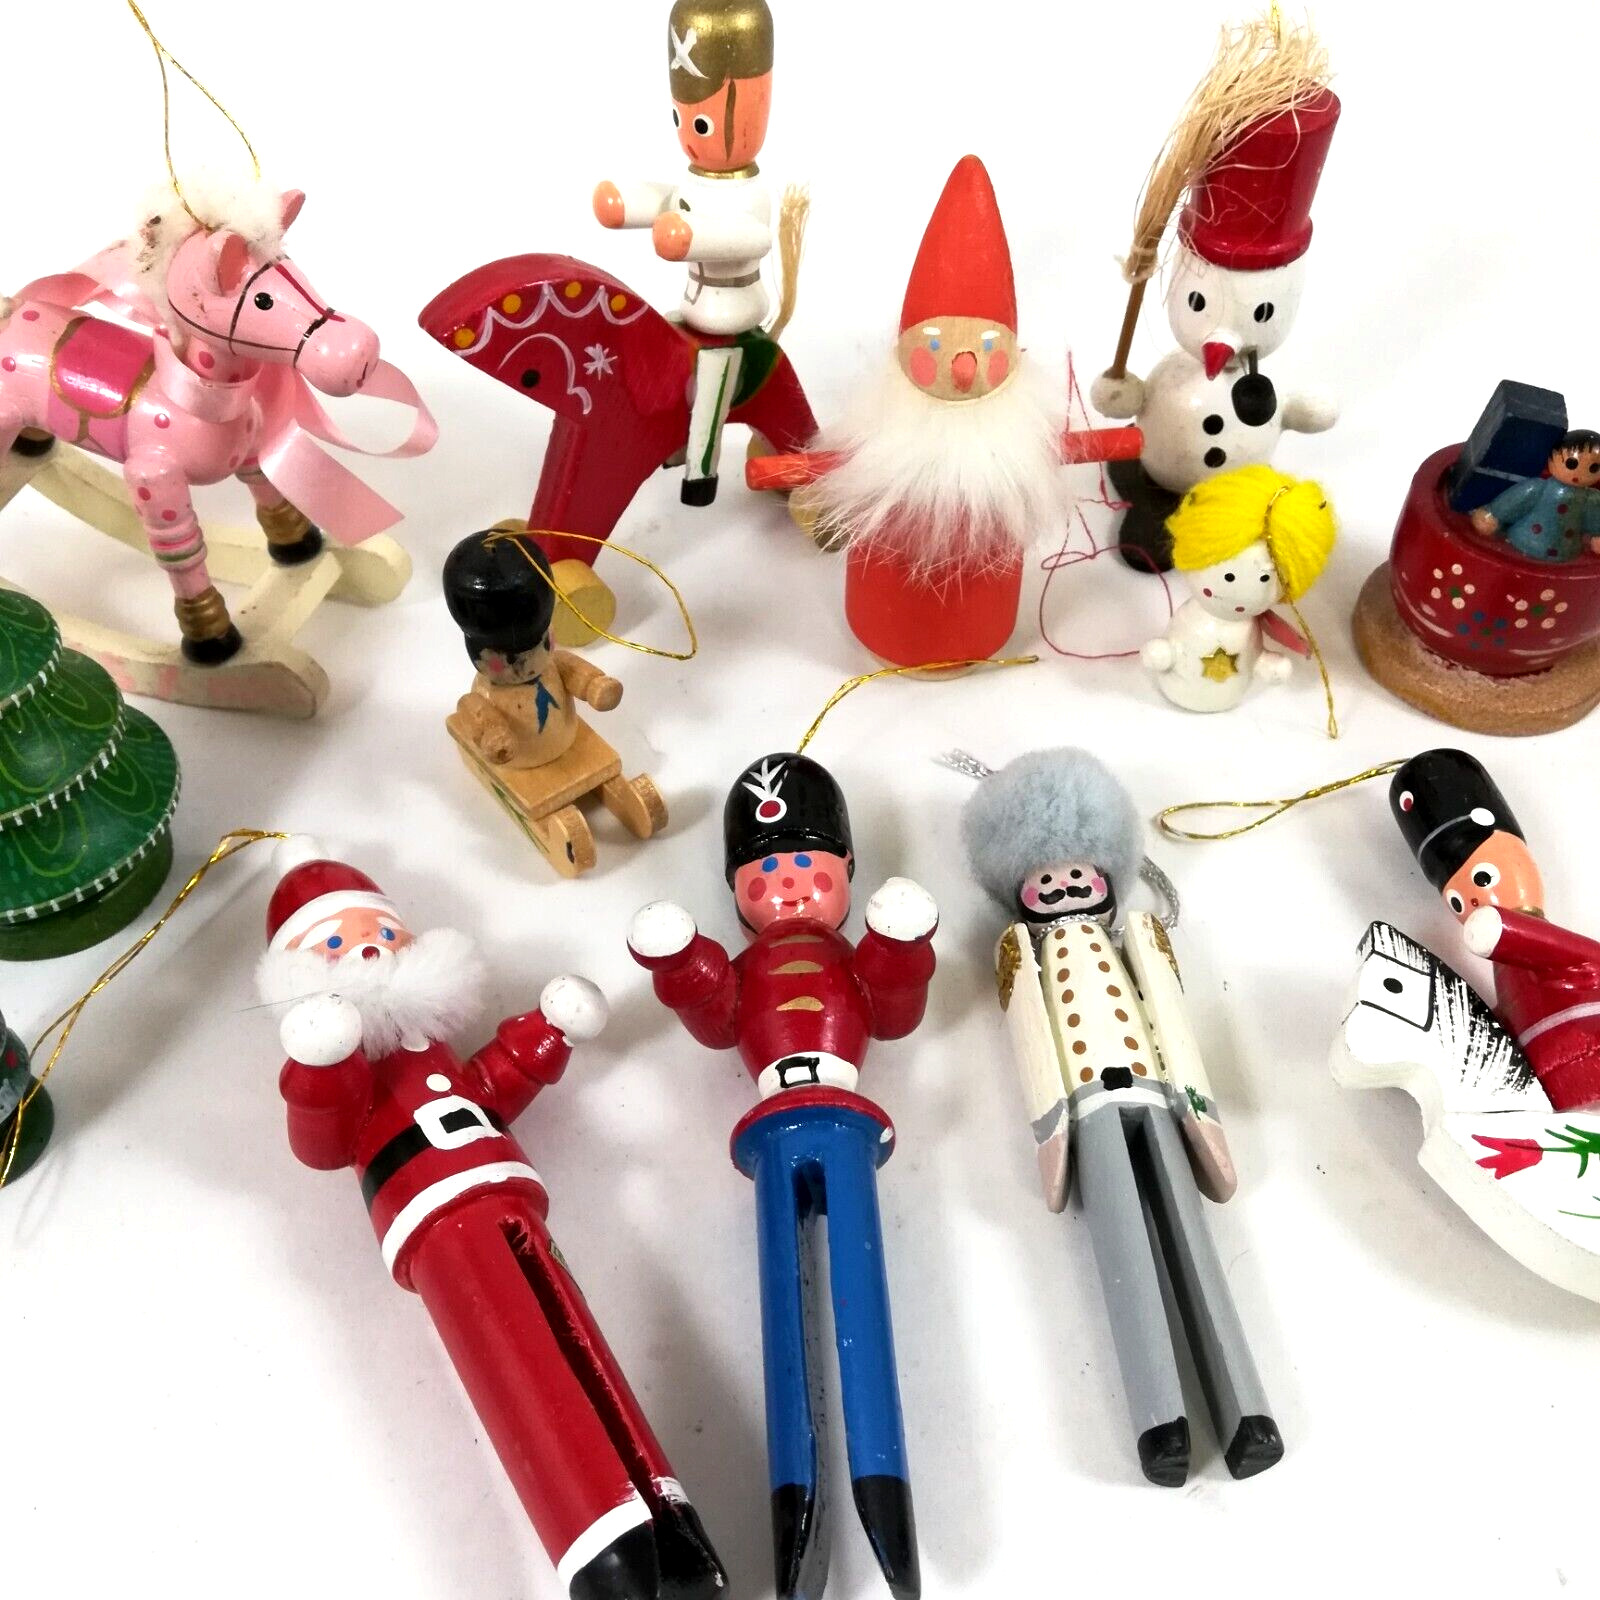 Vintage Clothespin & Wooden Christmas Ornaments Santa Claus Snowman (13 Pcs)